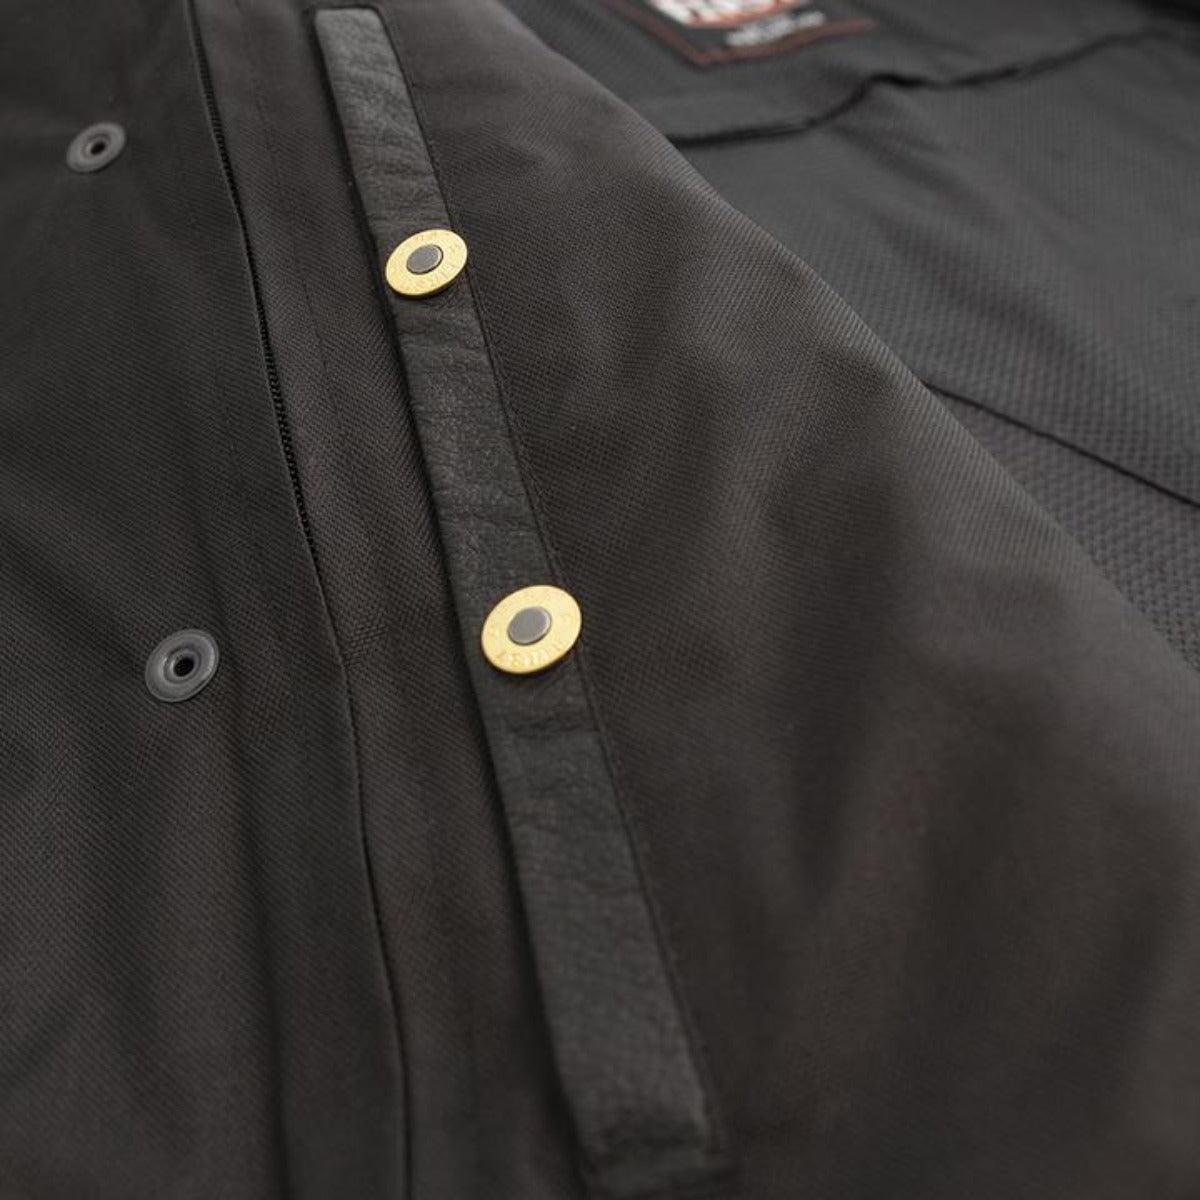 First Manufacturing Sharp Shooter - Men's Motorcycle Leather Vest, Black/Olive - American Legend Rider